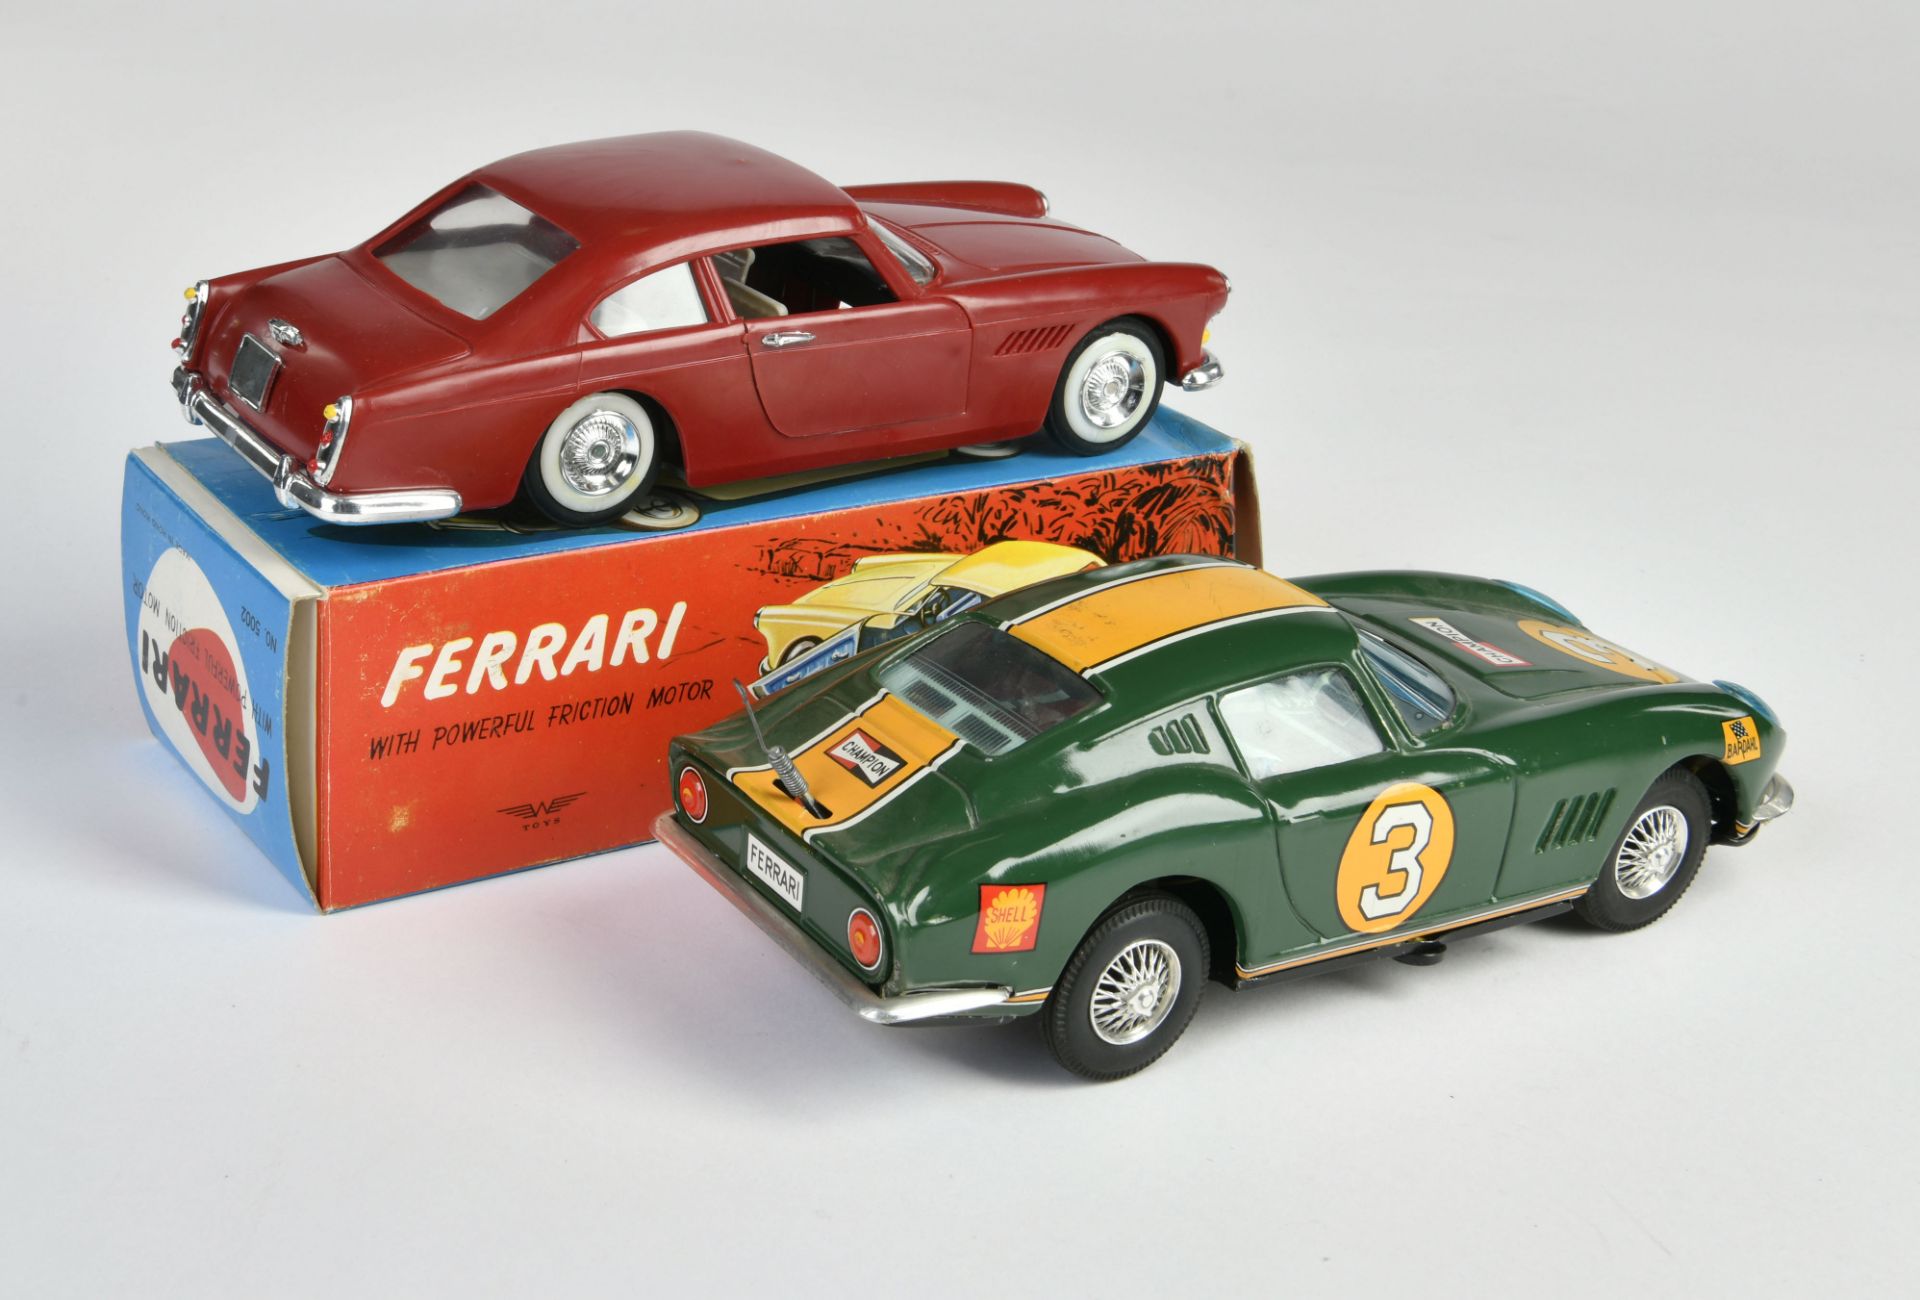 Bandai & W Toys, 2x Ferrari, Japan, Hong Kong, 20-22 cm, tin, plastic, friction ok, 1x box, C 2+ - Image 2 of 2